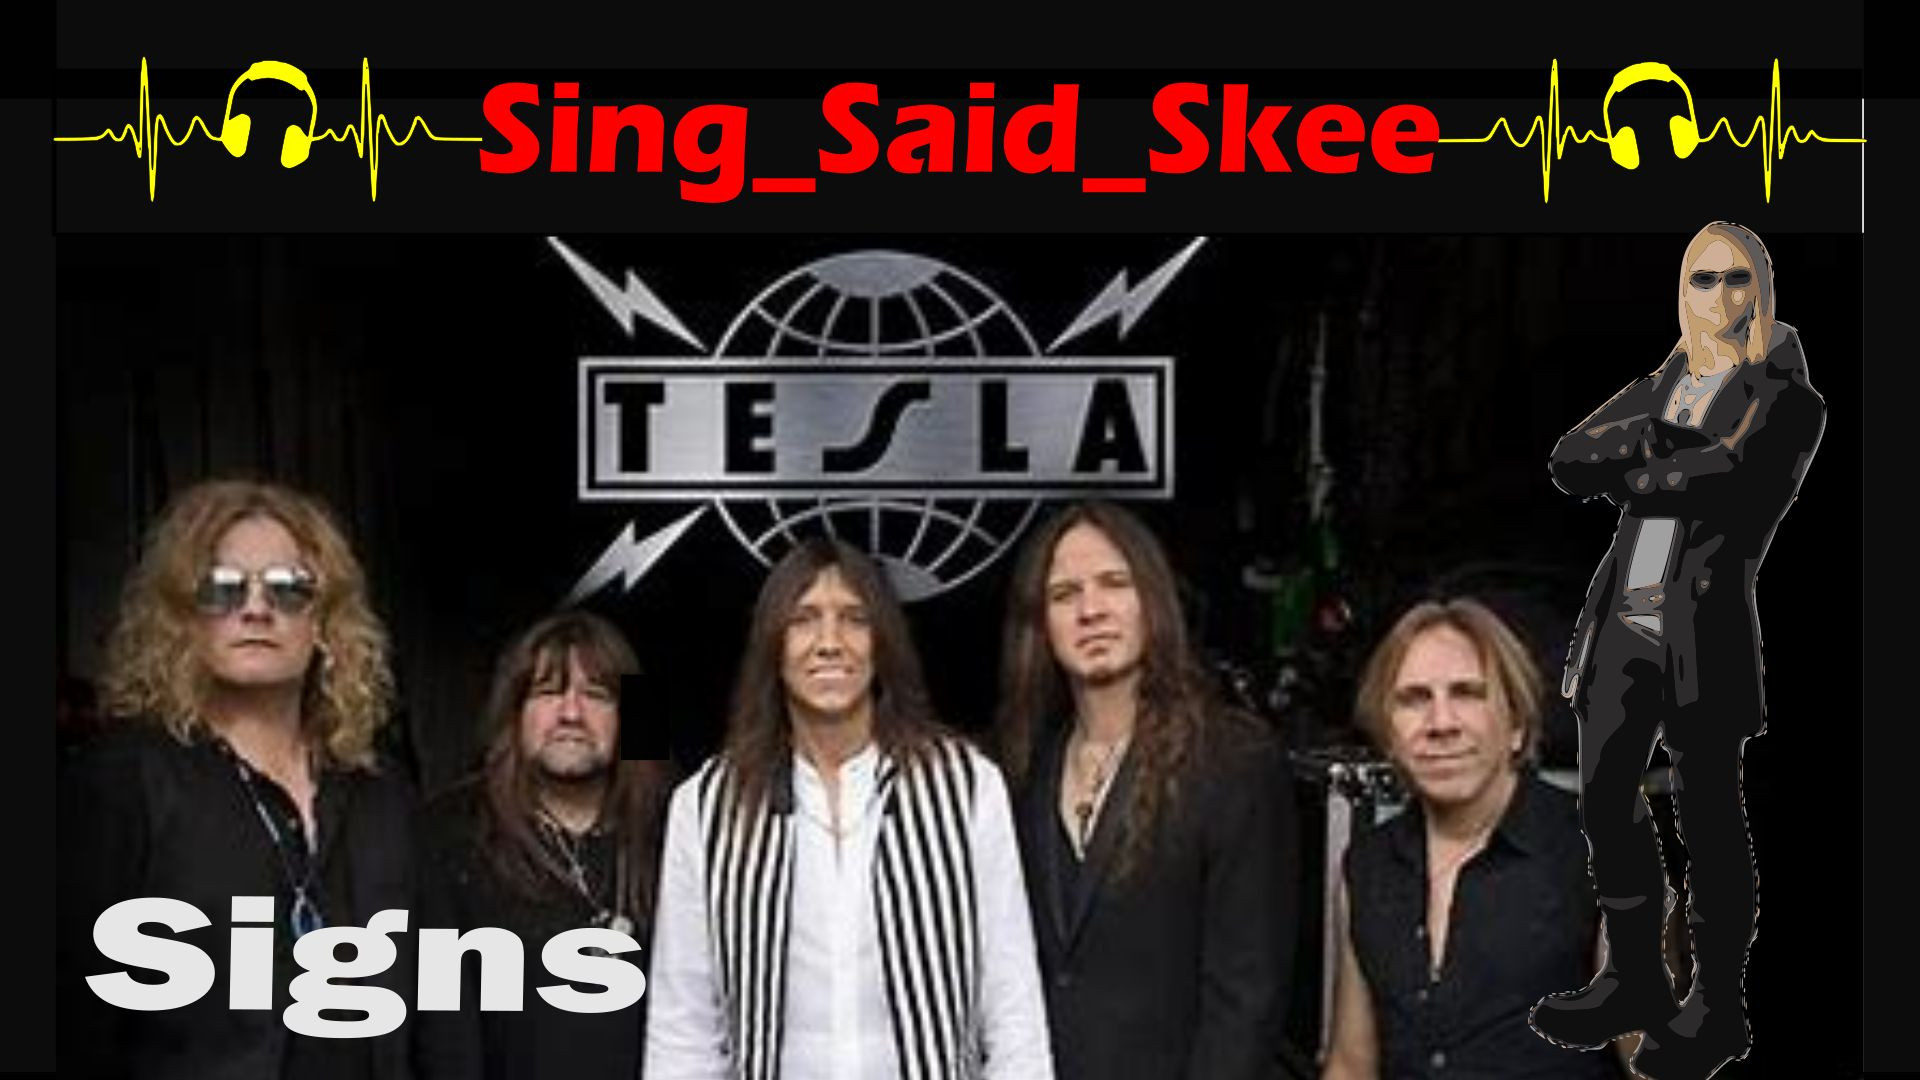 Signs - Tesla - Sing_Said_Skee